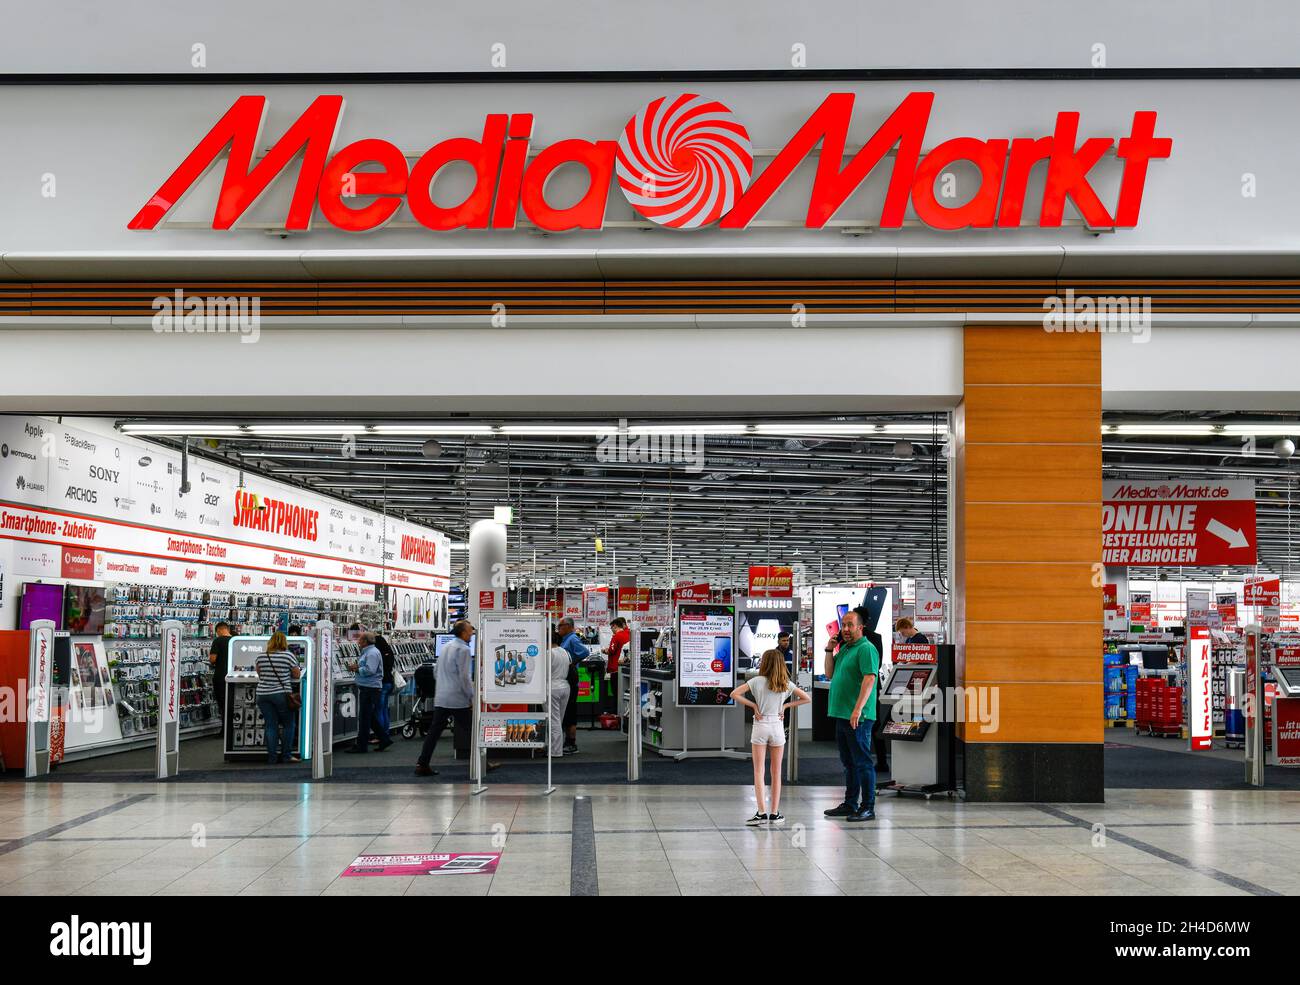 mediamarkt media markt logo high resolution stock photography and images alamy